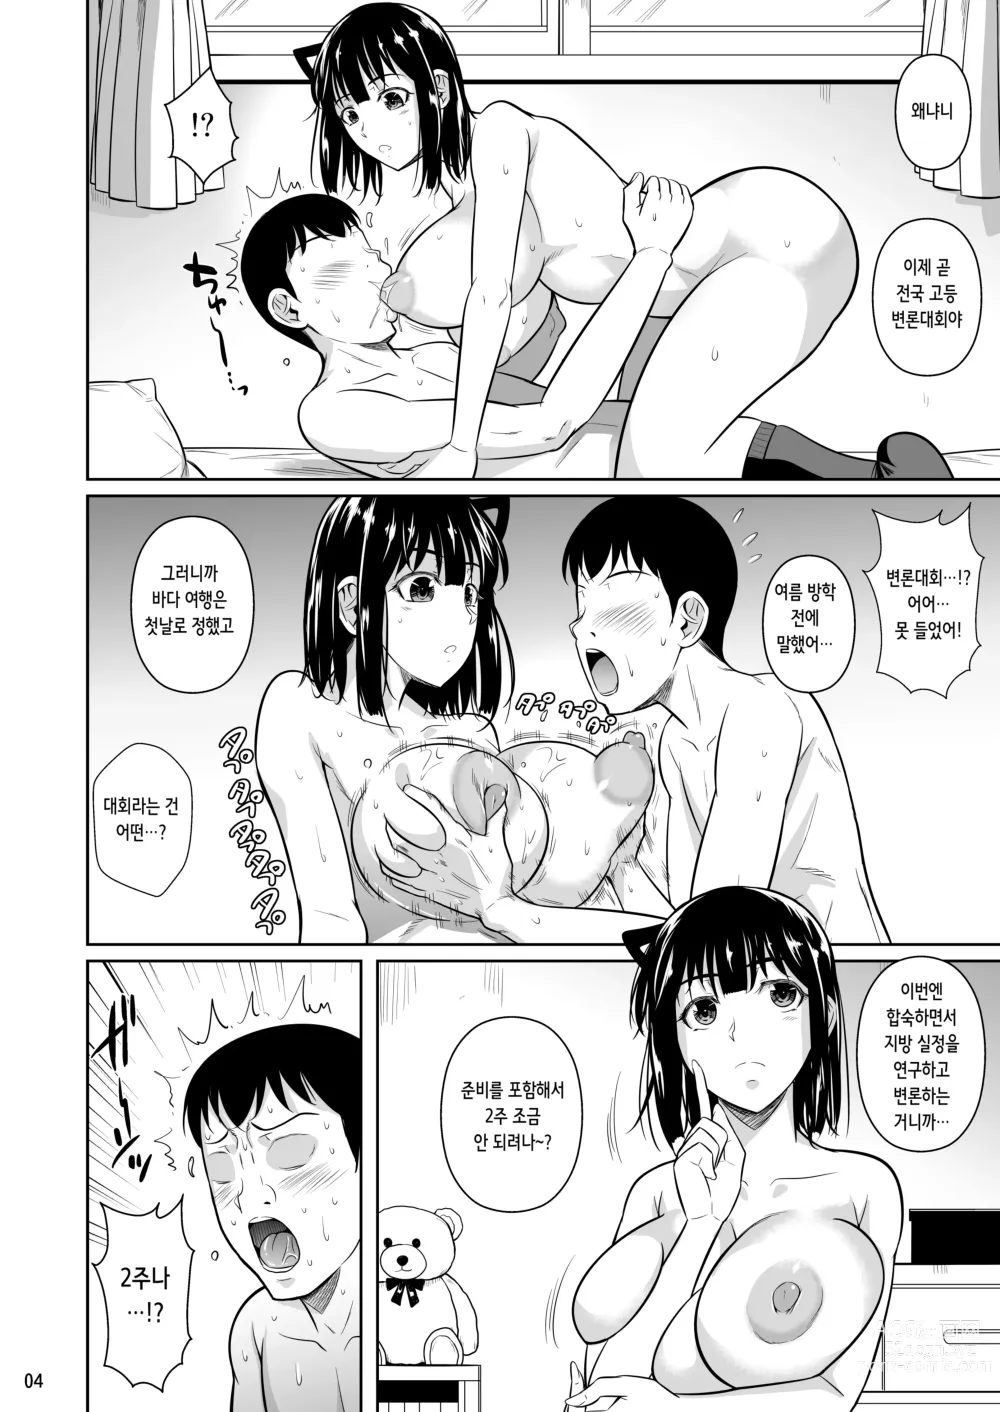 Page 6 of doujinshi 왕따 모브 4 첫 섹스를 한 우등생이 2주간 금욕한 끝에 변론 중에 섹스하는 이야기